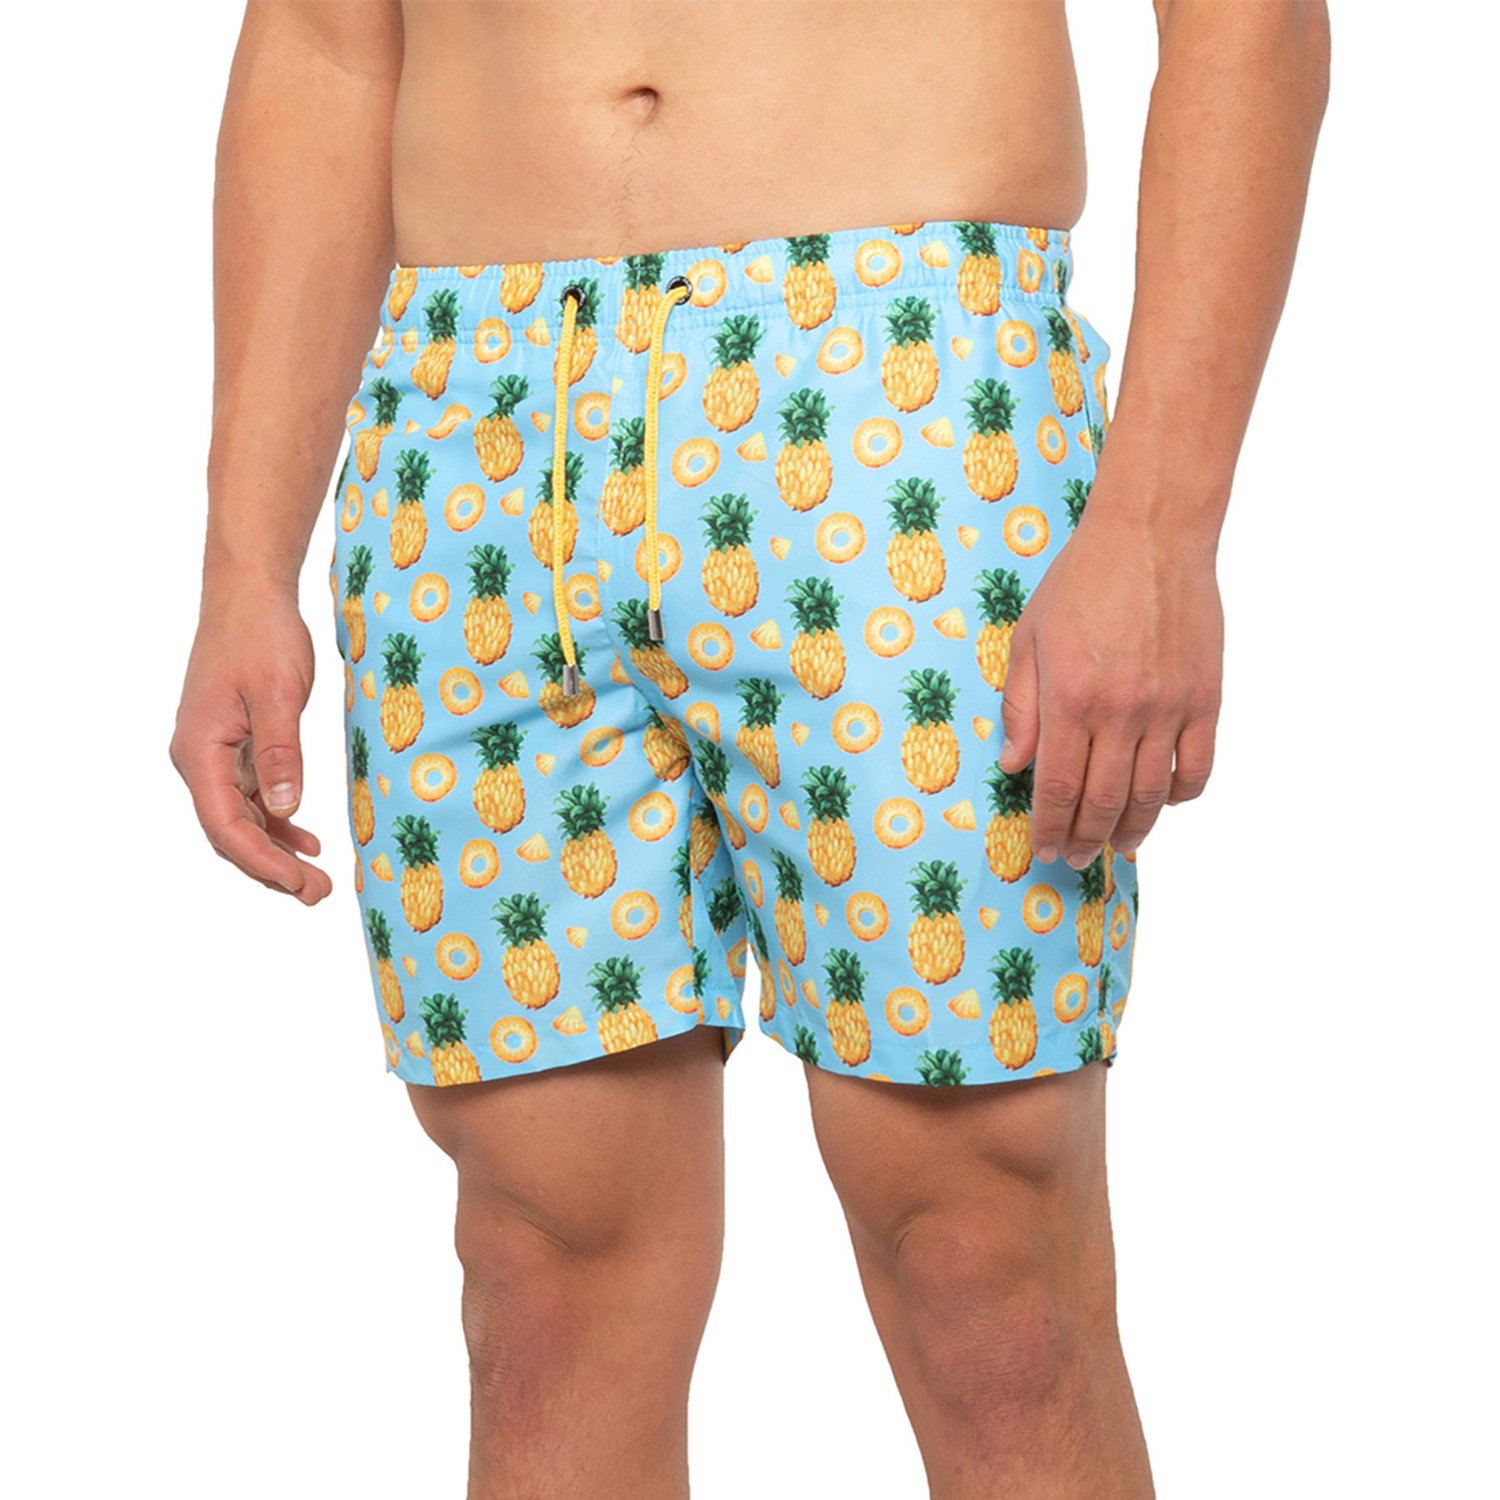 Franks Pineapple Sky Swim Trunks (For Men) - Save 60%